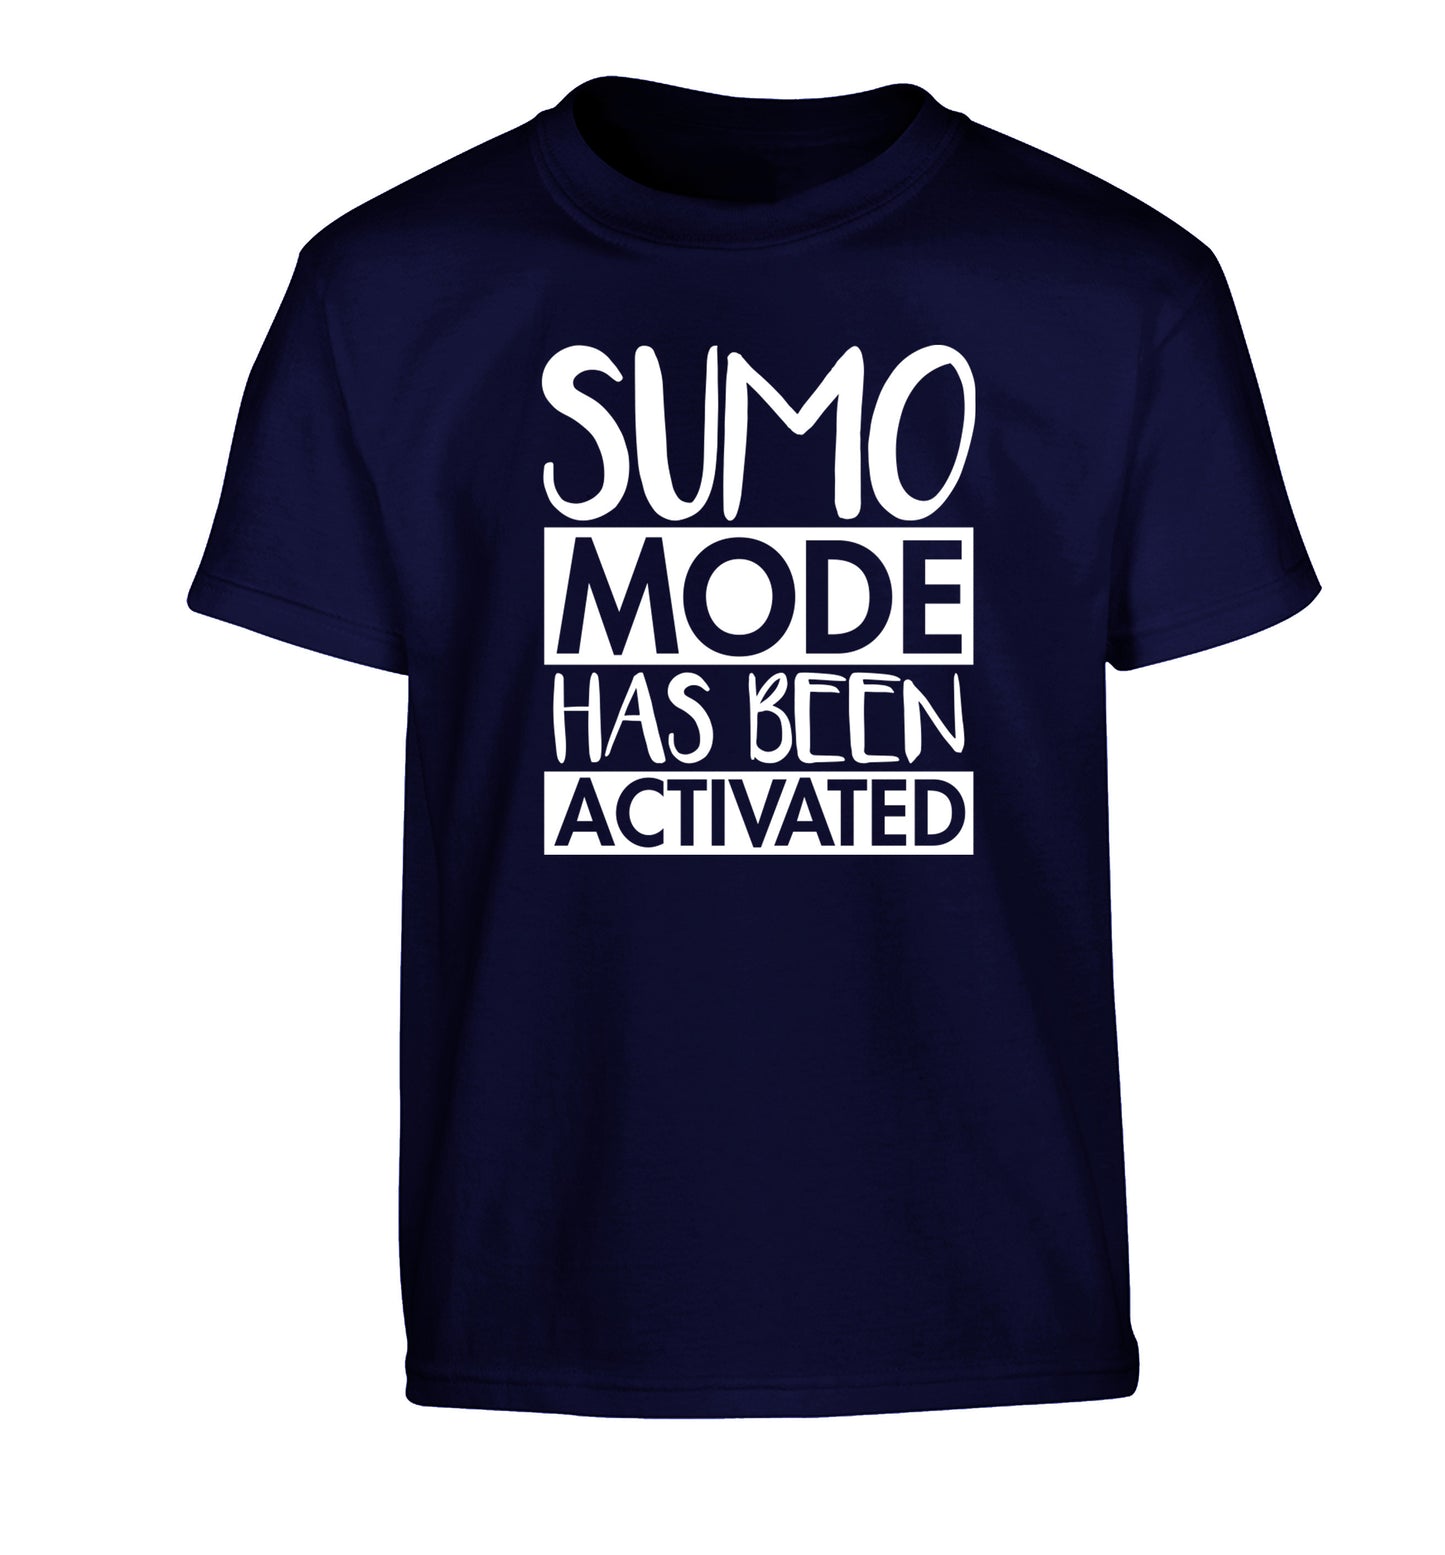 Sumo mode activated Children's navy Tshirt 12-14 Years